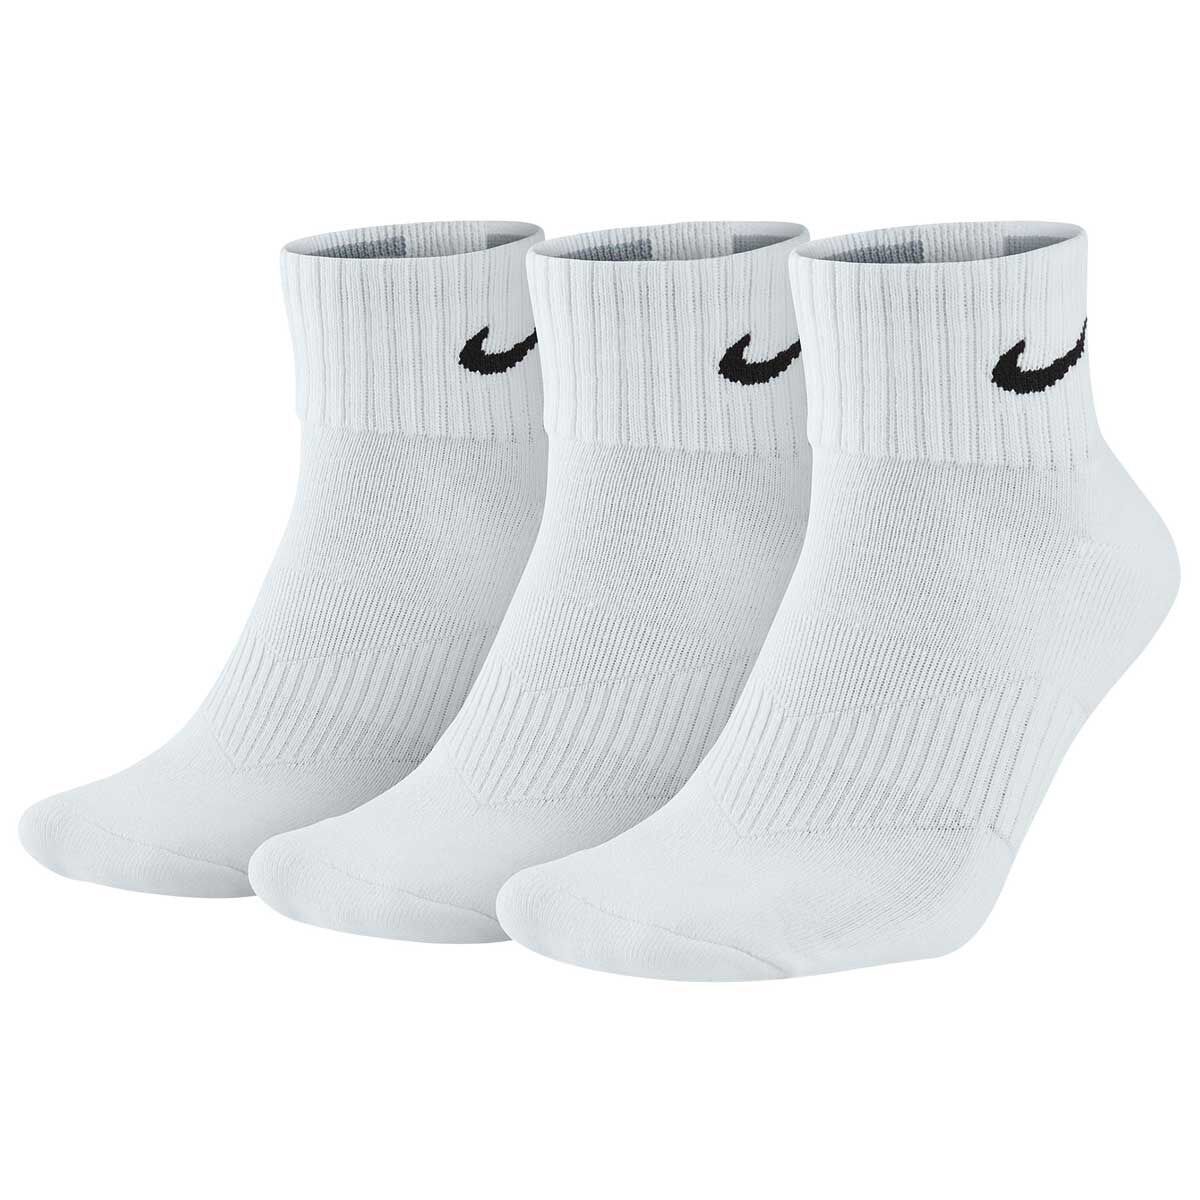 size 13 socks nike